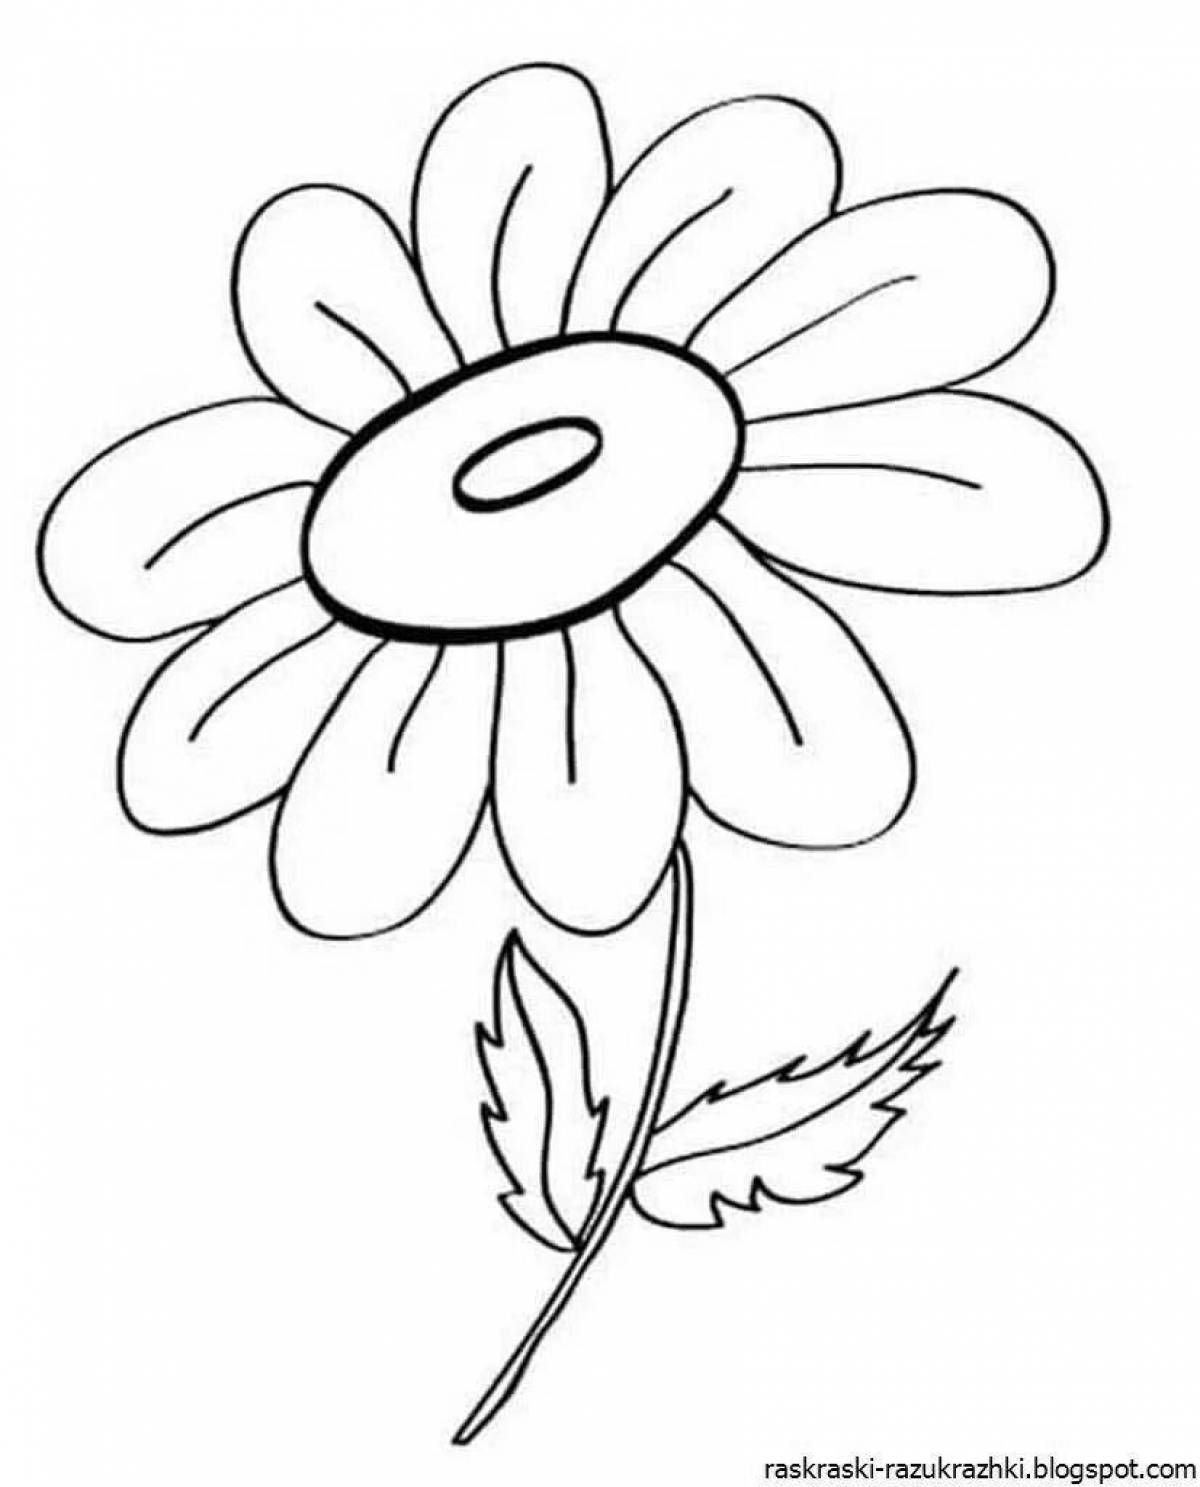 Exuberant flower drawing for kids